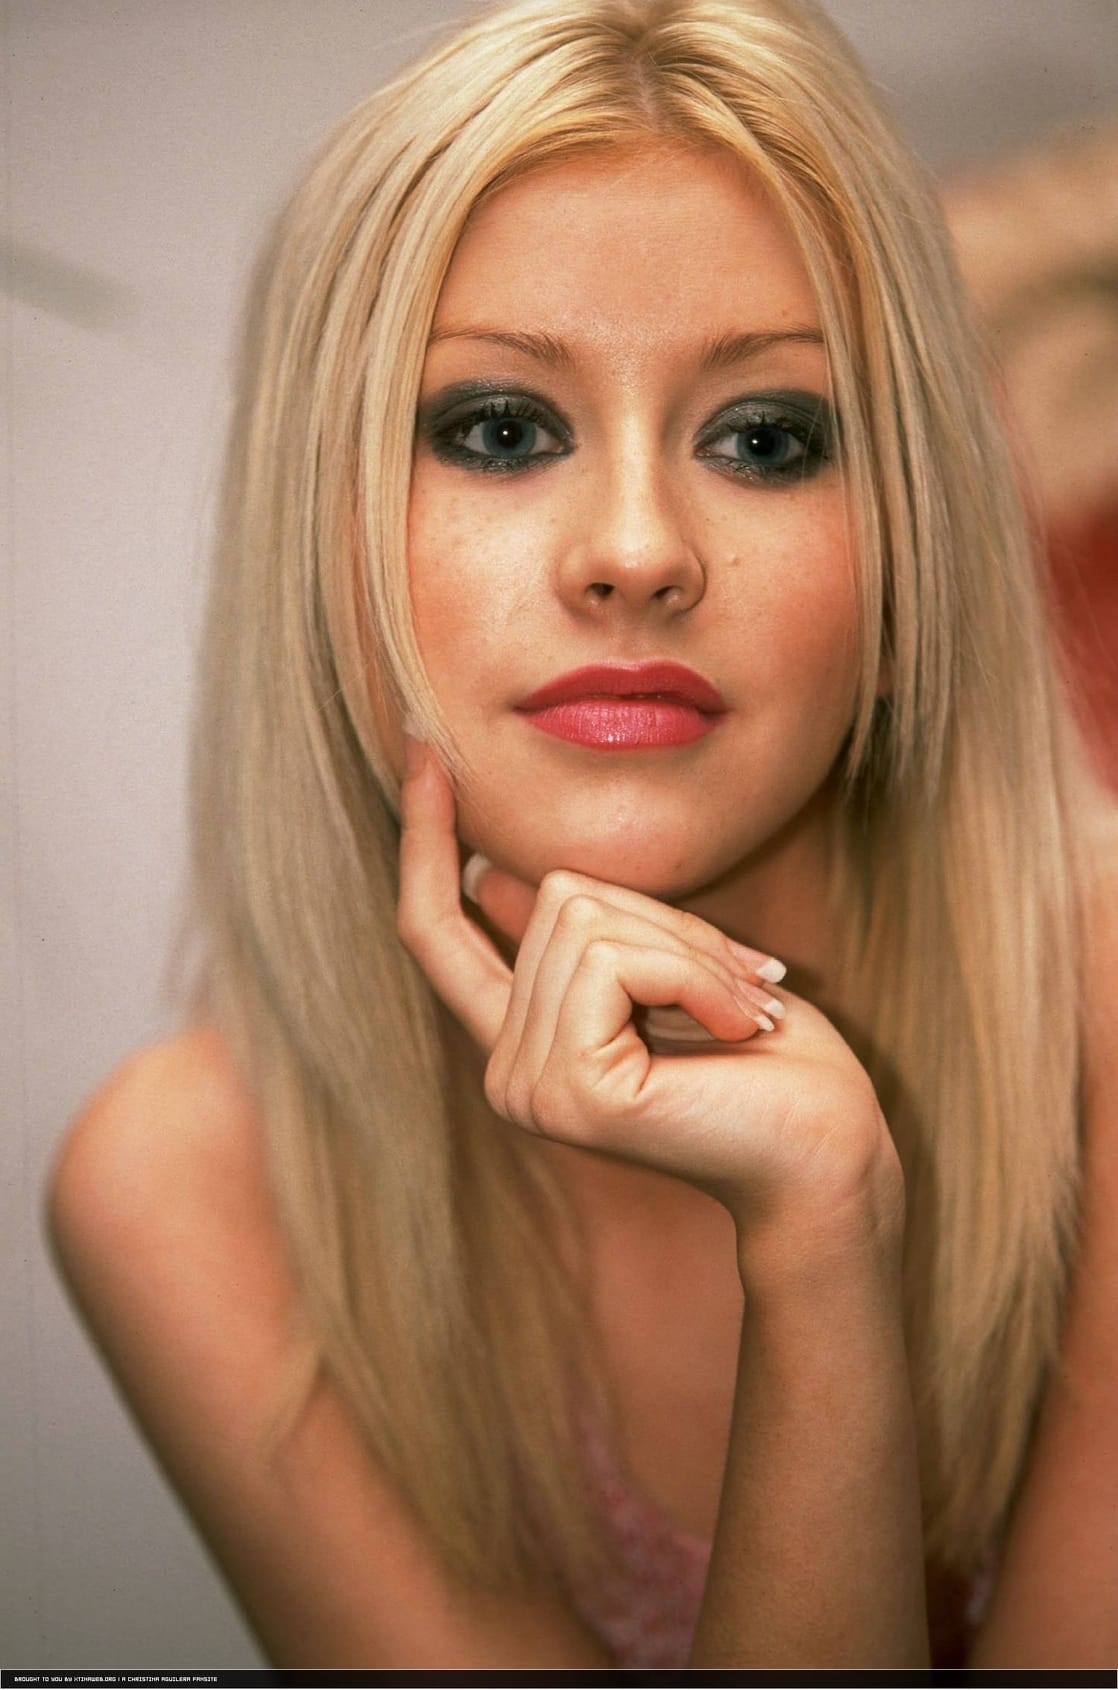 Picture Of Christina Aguilera